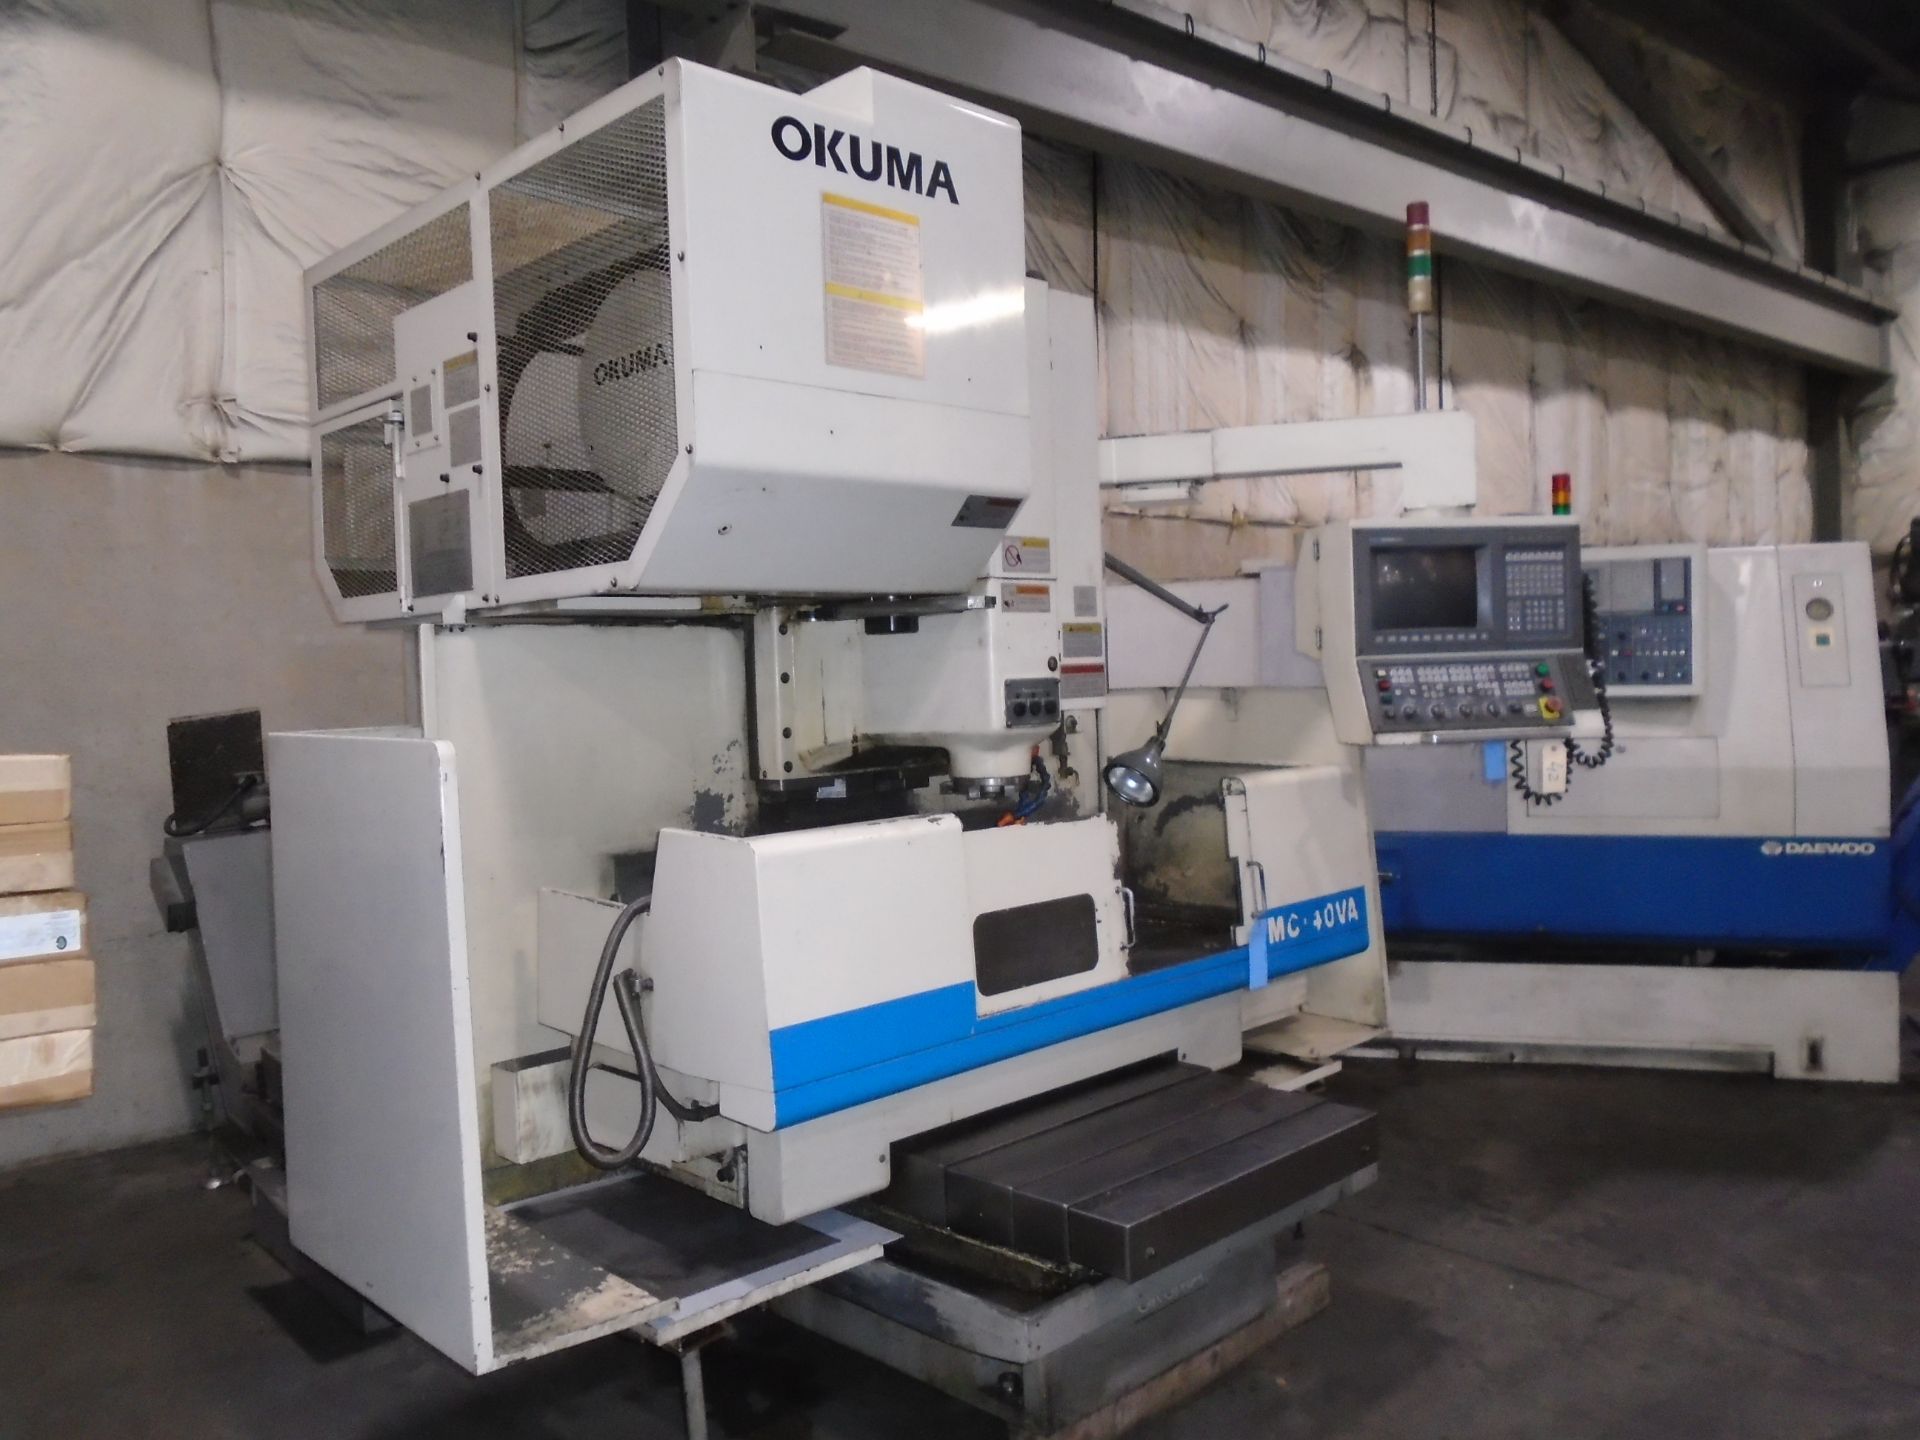 Okuma CNC Mill MC-40VA - Image 2 of 11